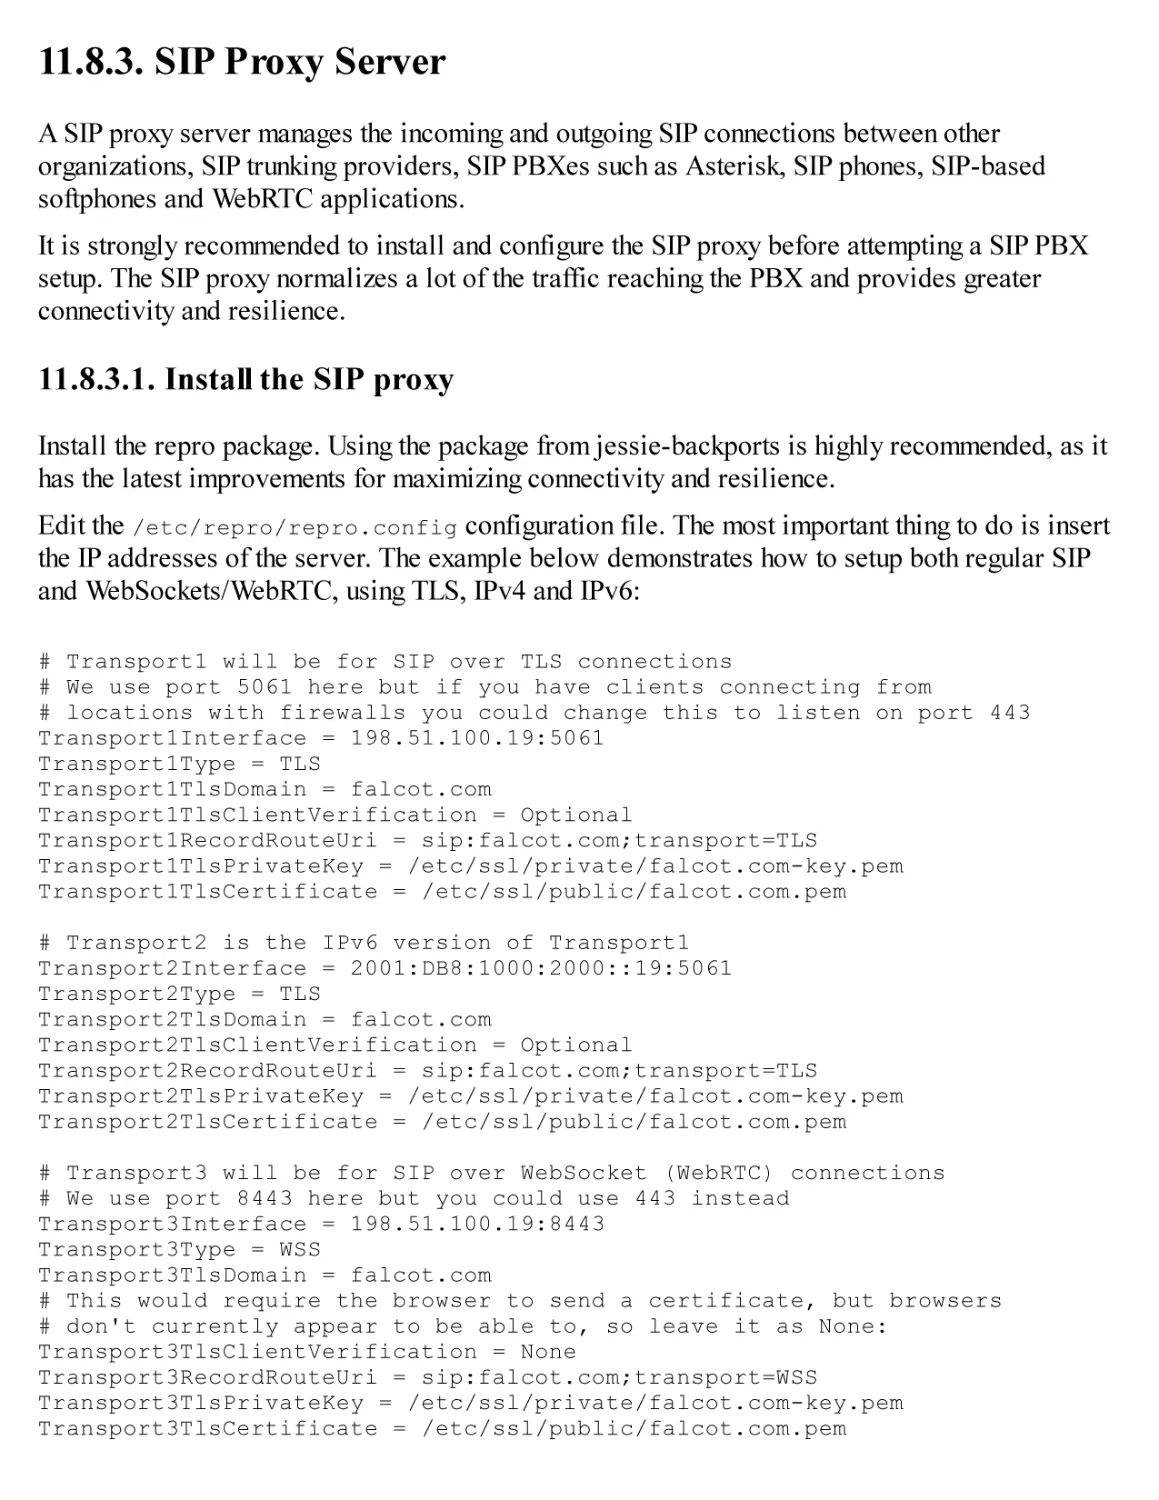 11.8.3. SIP Proxy Server
11.8.3.1. Install the SIP proxy